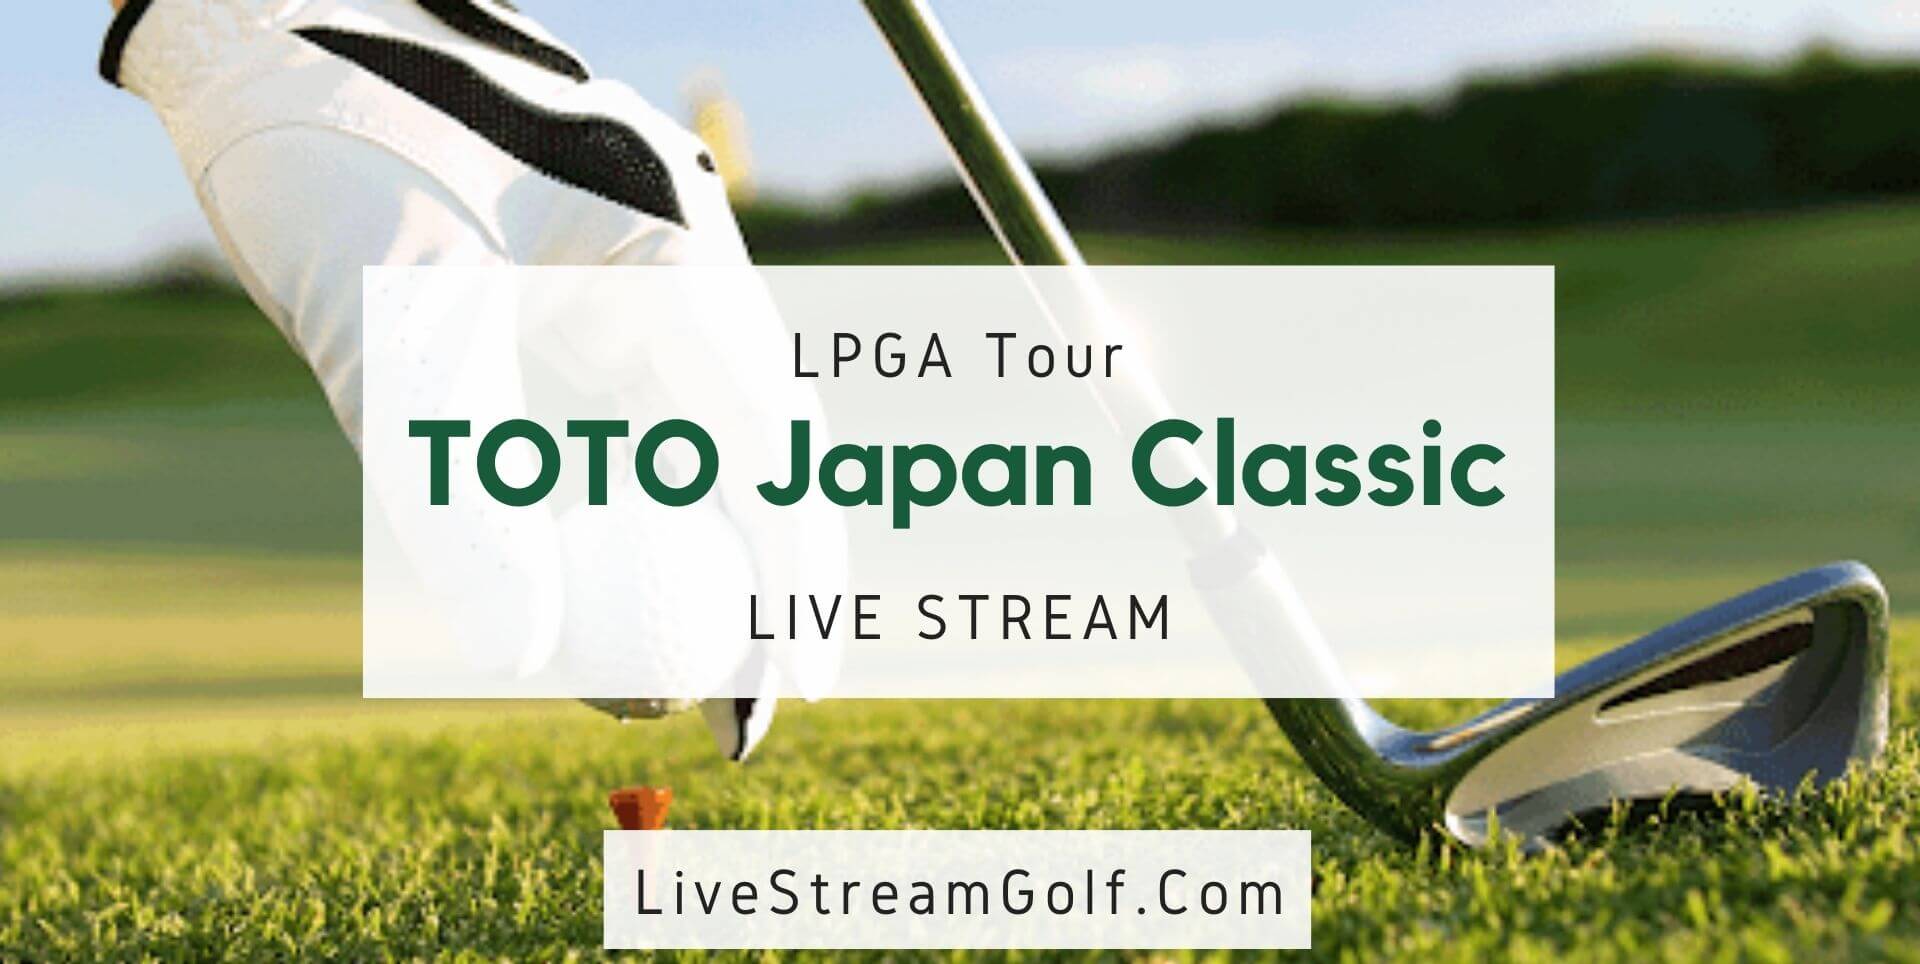 TOTO Japan Classic Day 2 Live Stream: LPGA Tour 2022